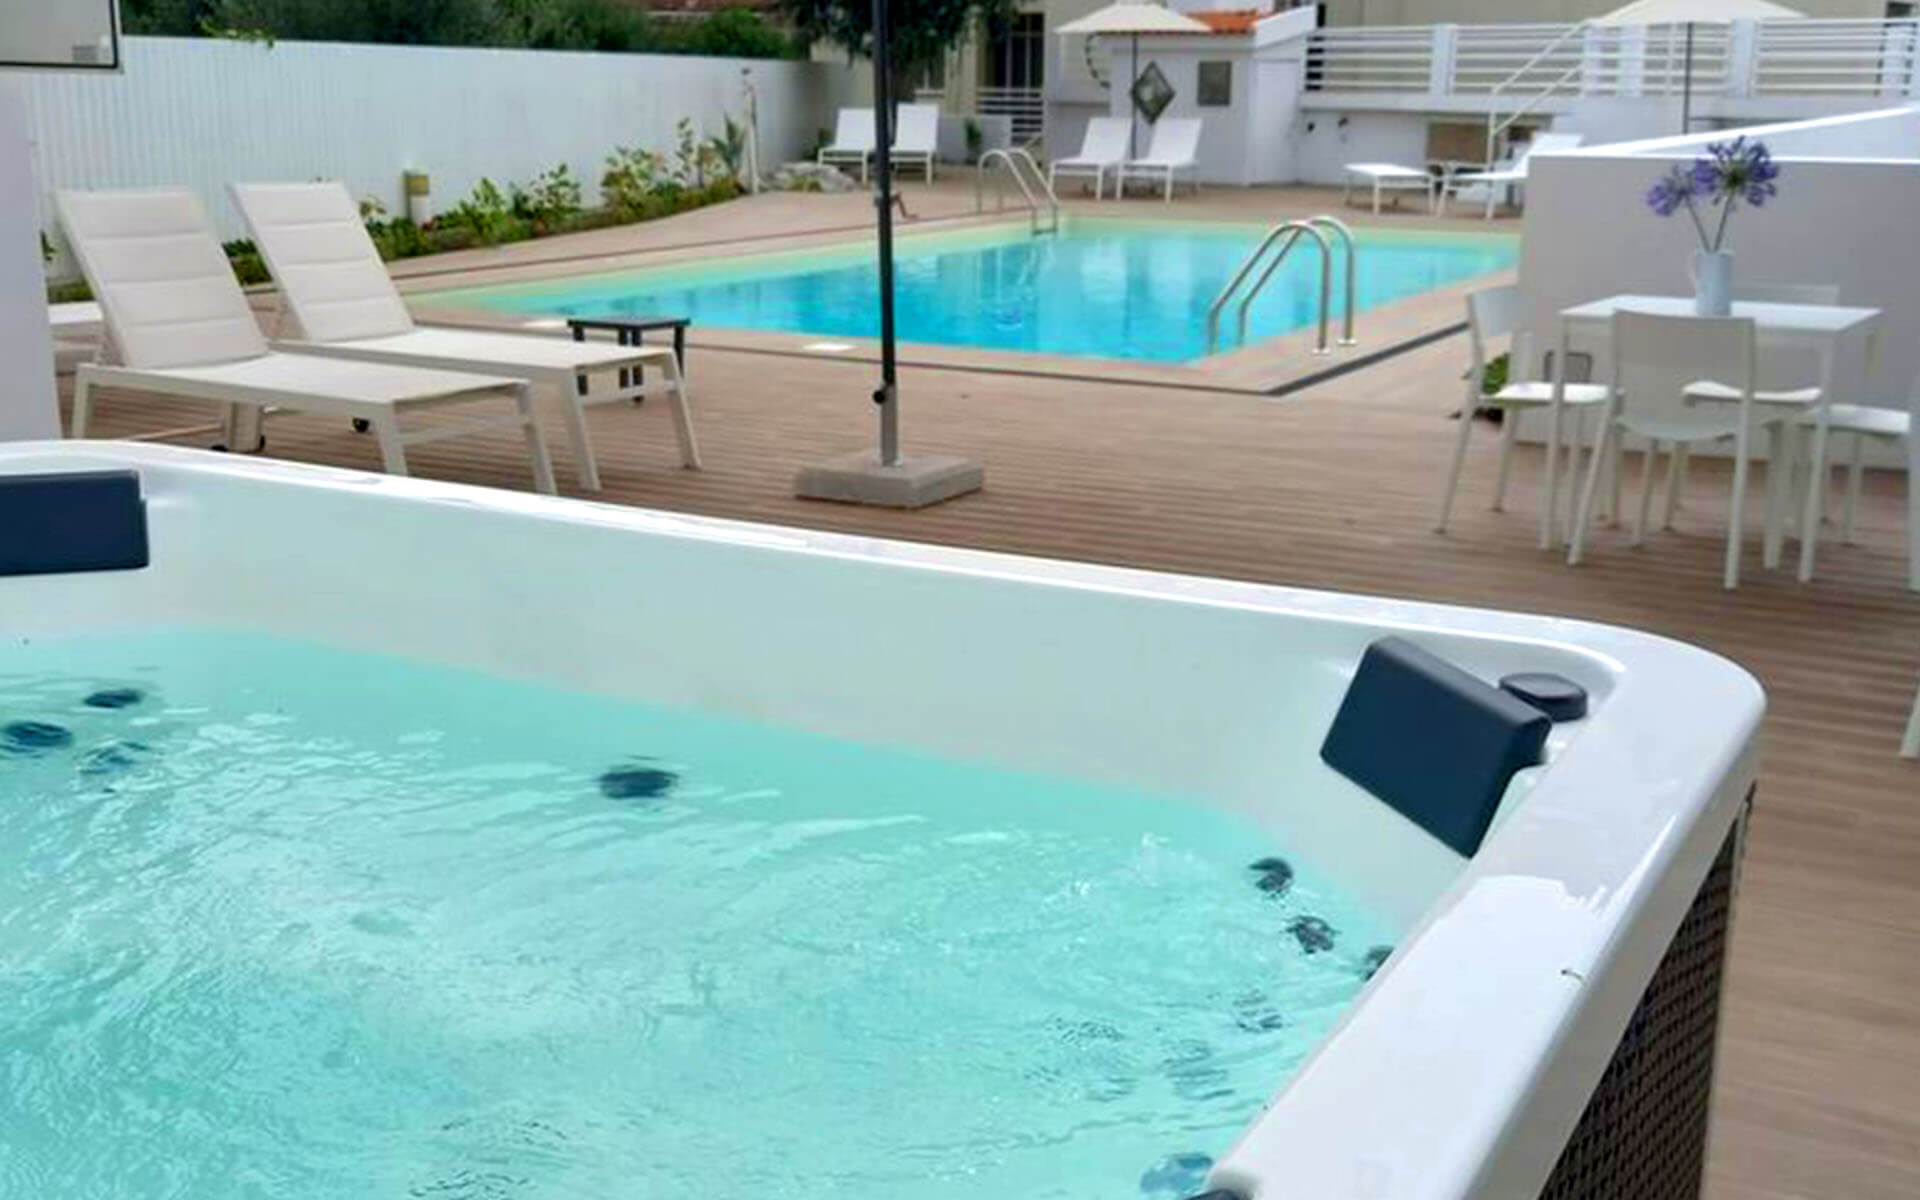 Jacuzzi & swimming pool area Hotel Pantanha Caldas da Felgueira